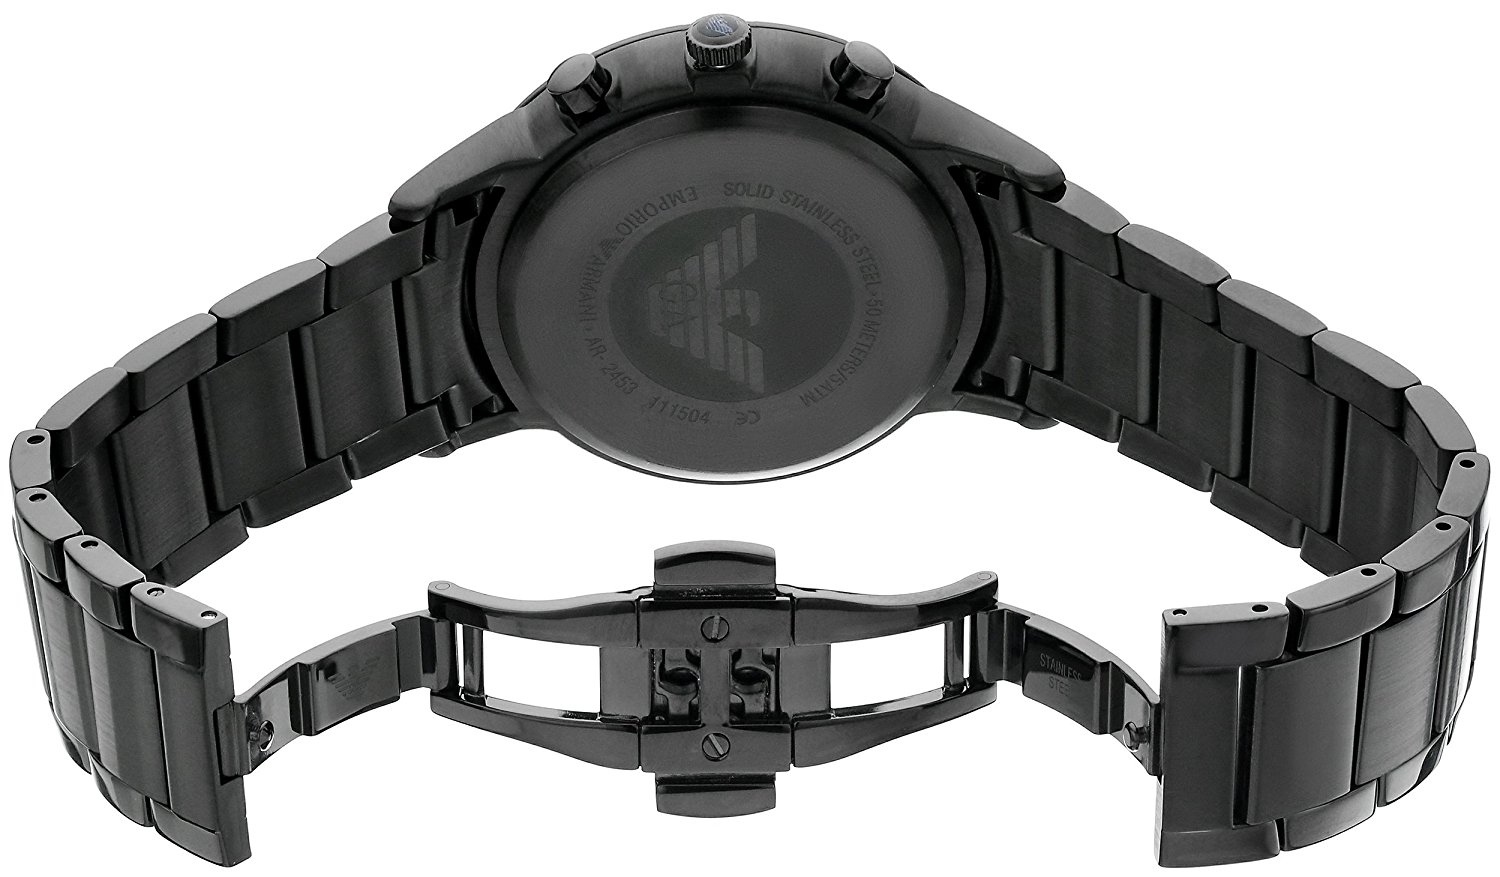 emporio armani men's black chronograph watch ar2453